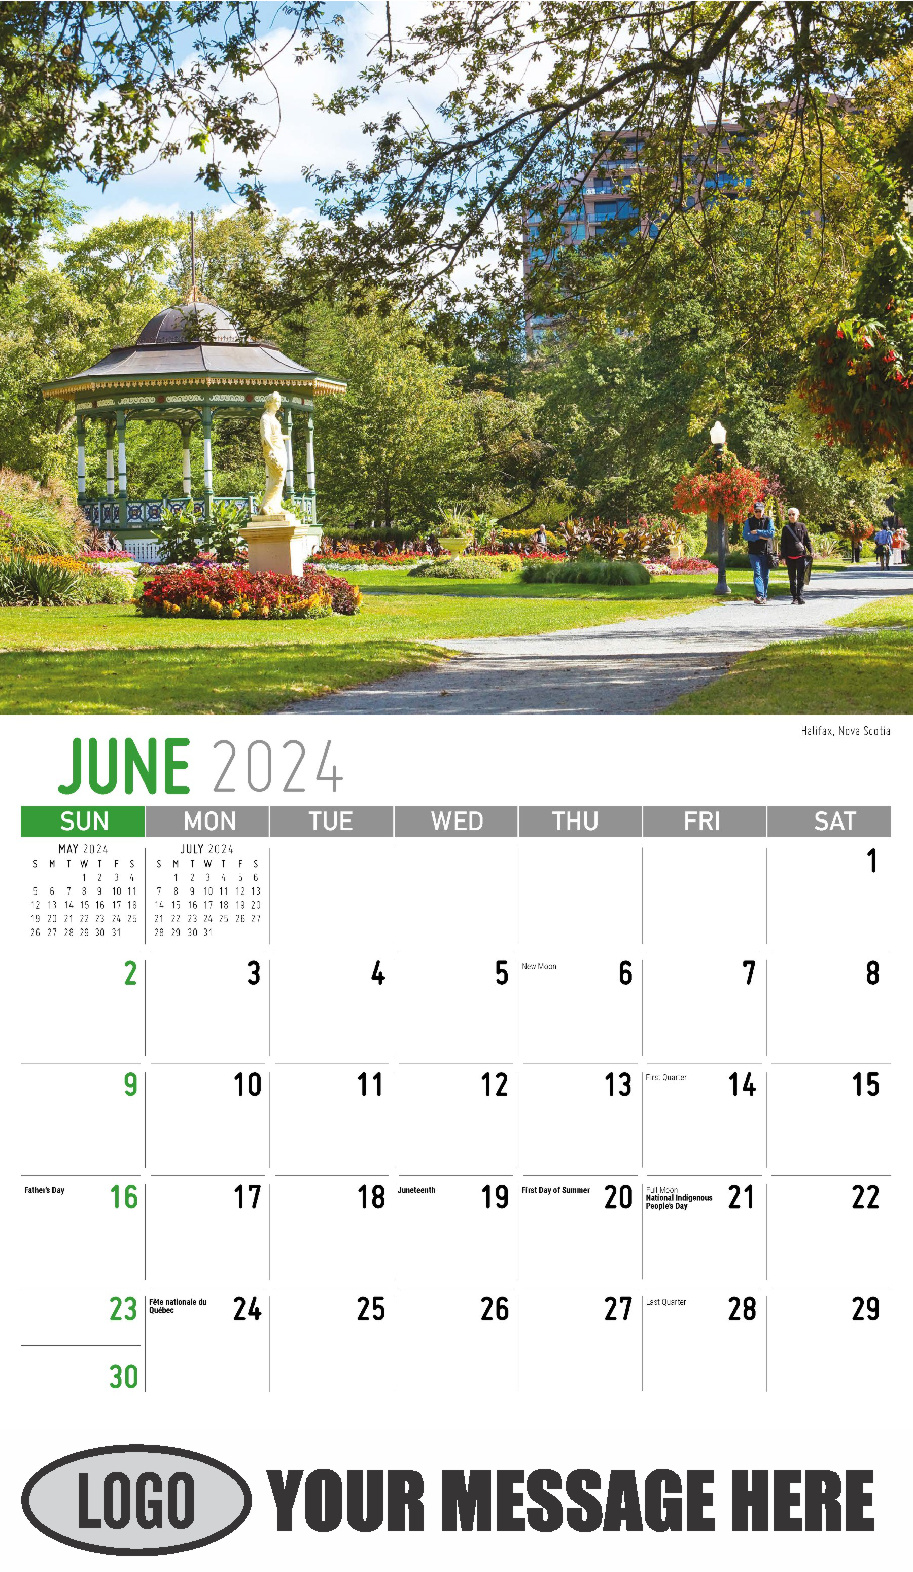 Atlantic Canada Scenic 2024 Business Promotion Calendar - June